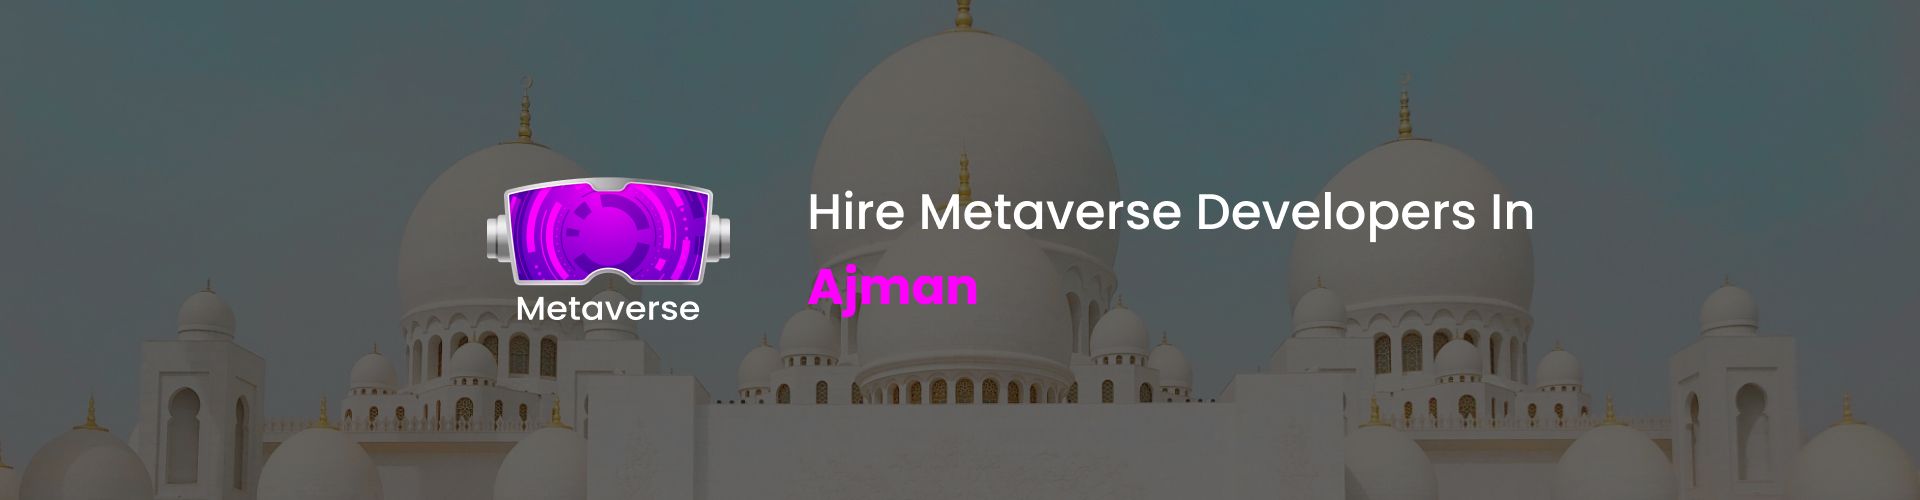 metaverse developers in ajman